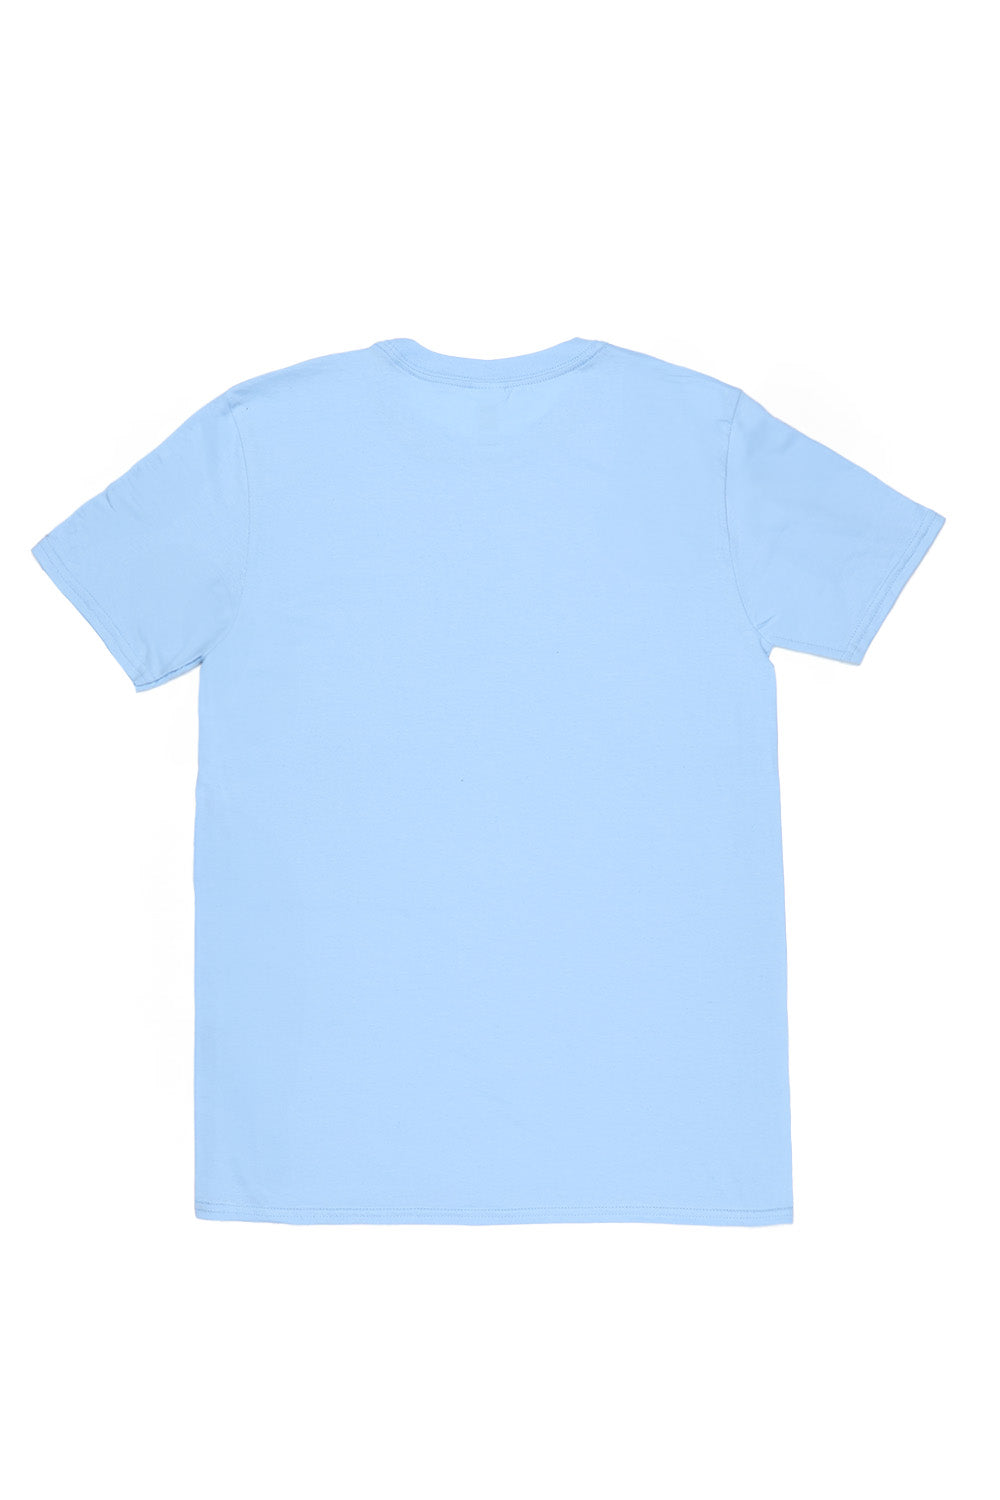 Los Angeles T-Shirt in Light Blue(Custom Packs)